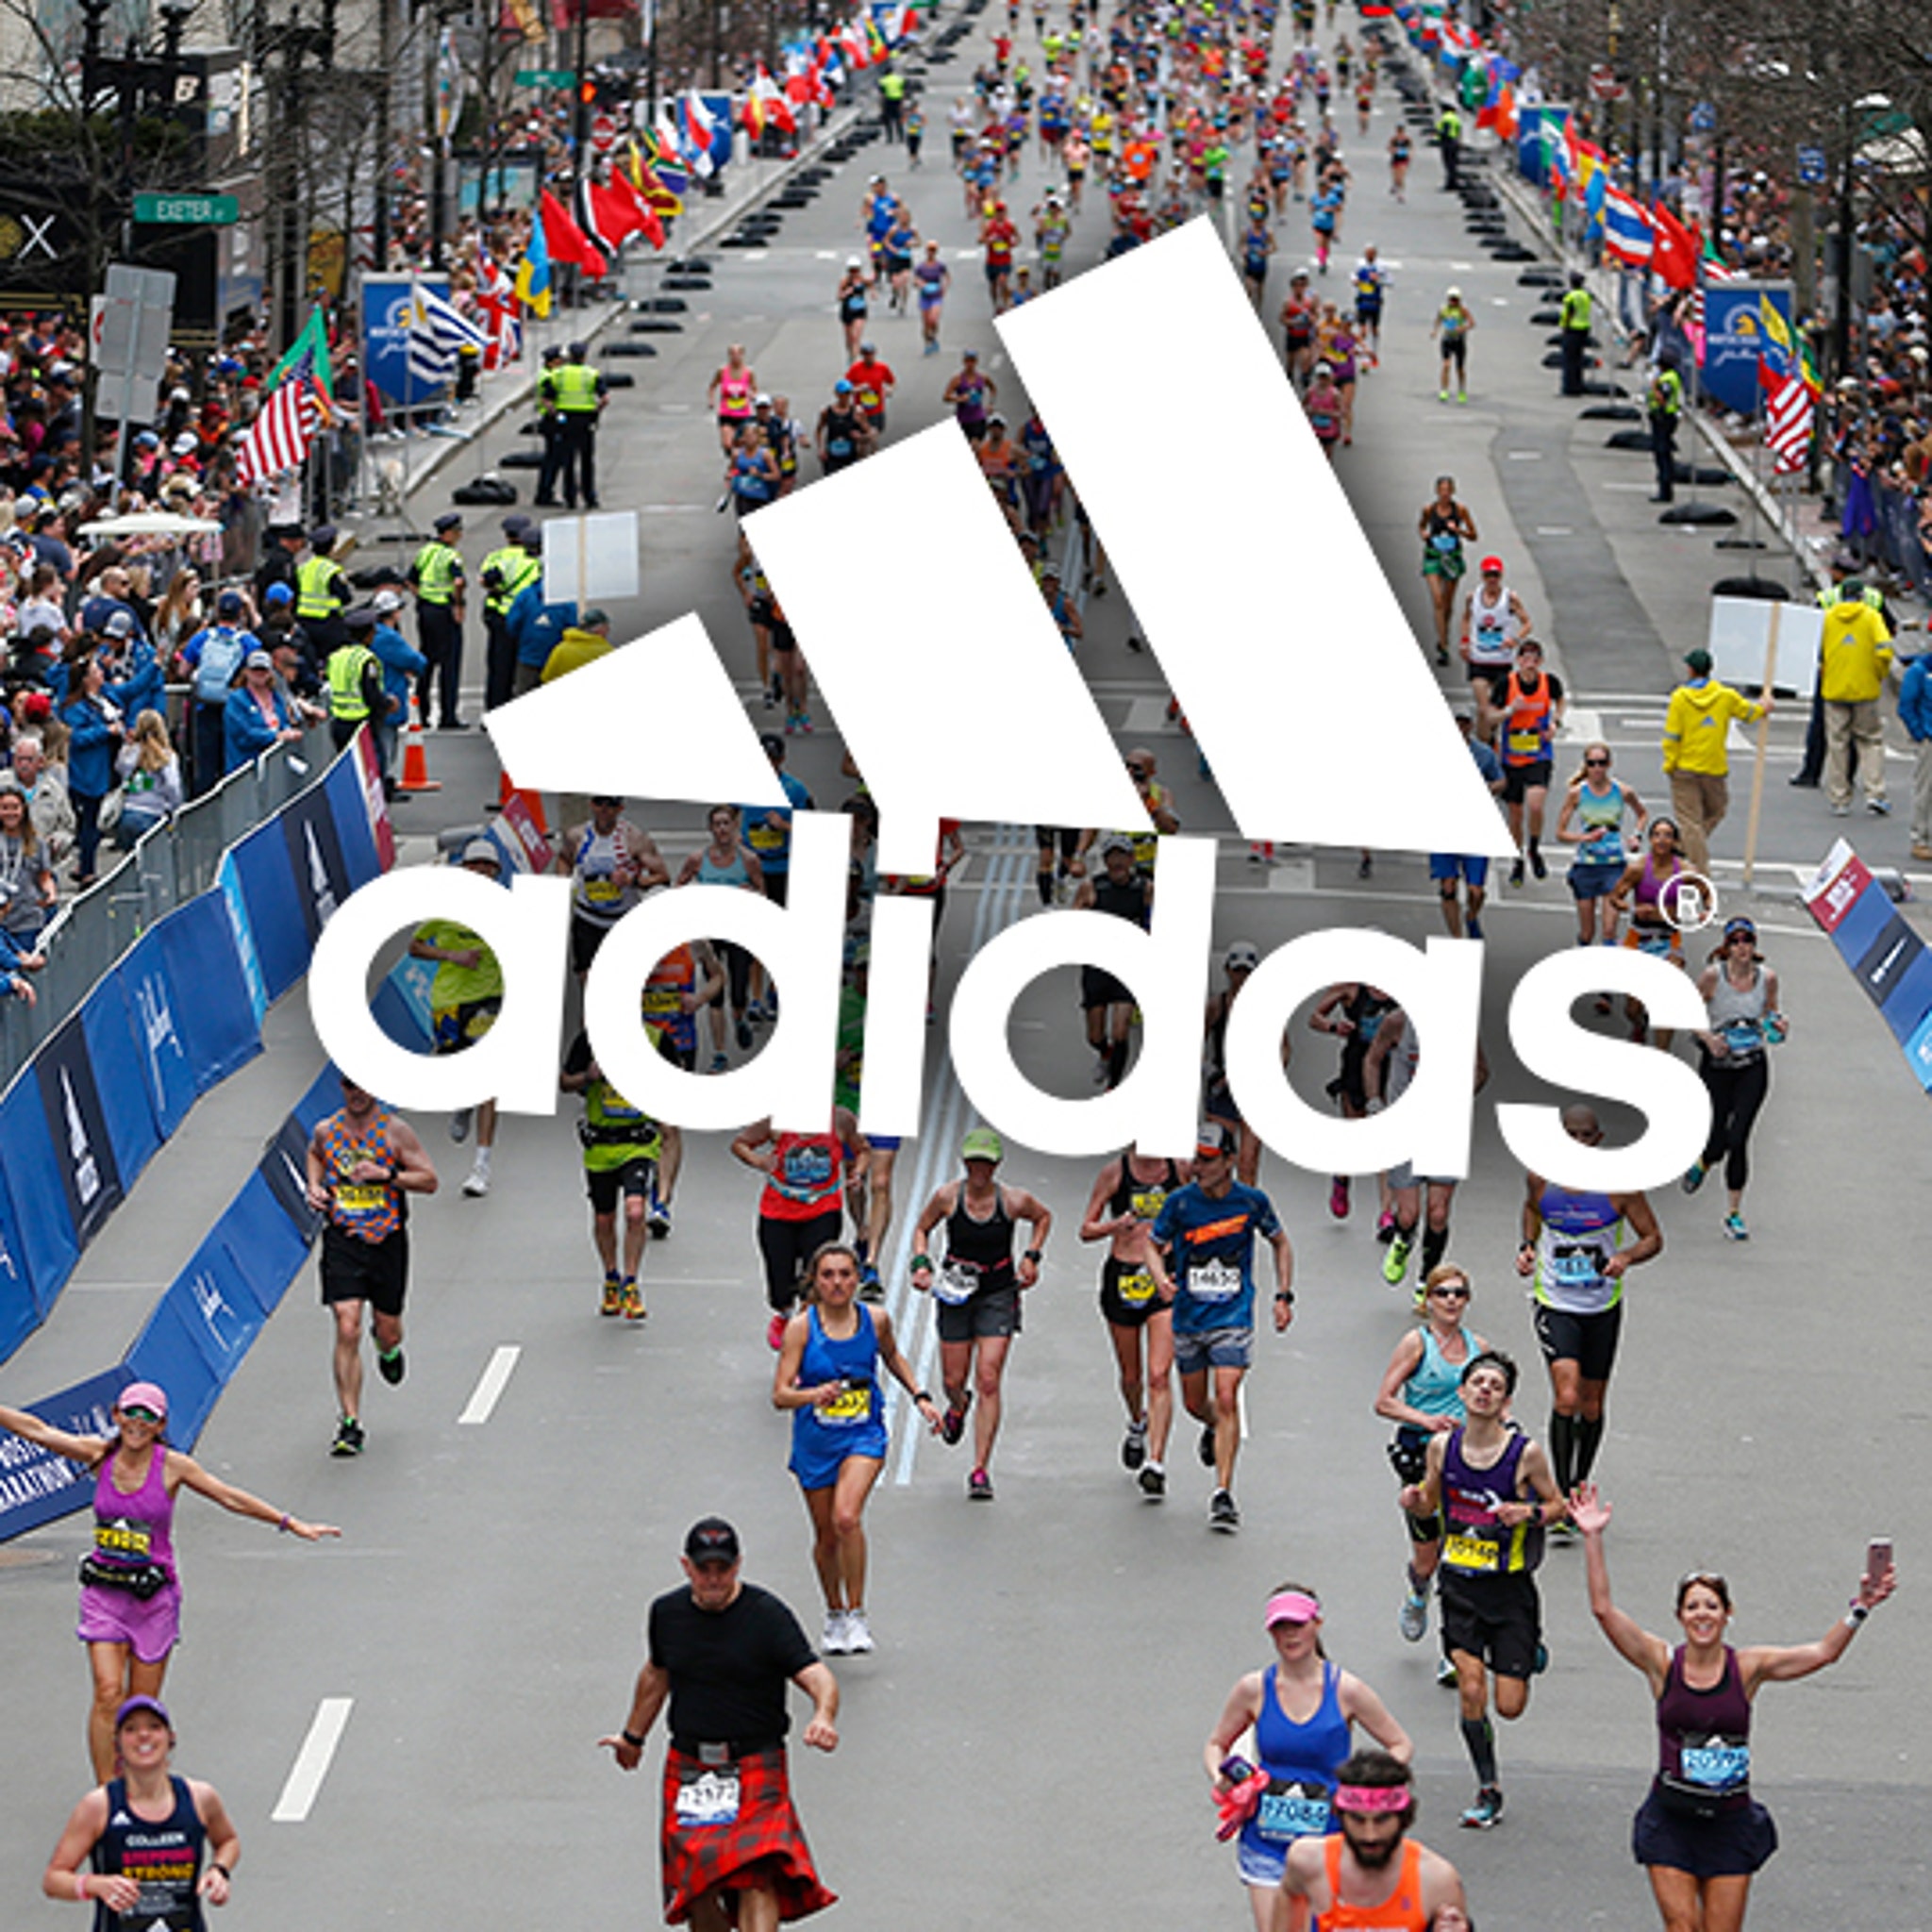 Adidas Taking Heat for Survived The Boston Marathon' Ad